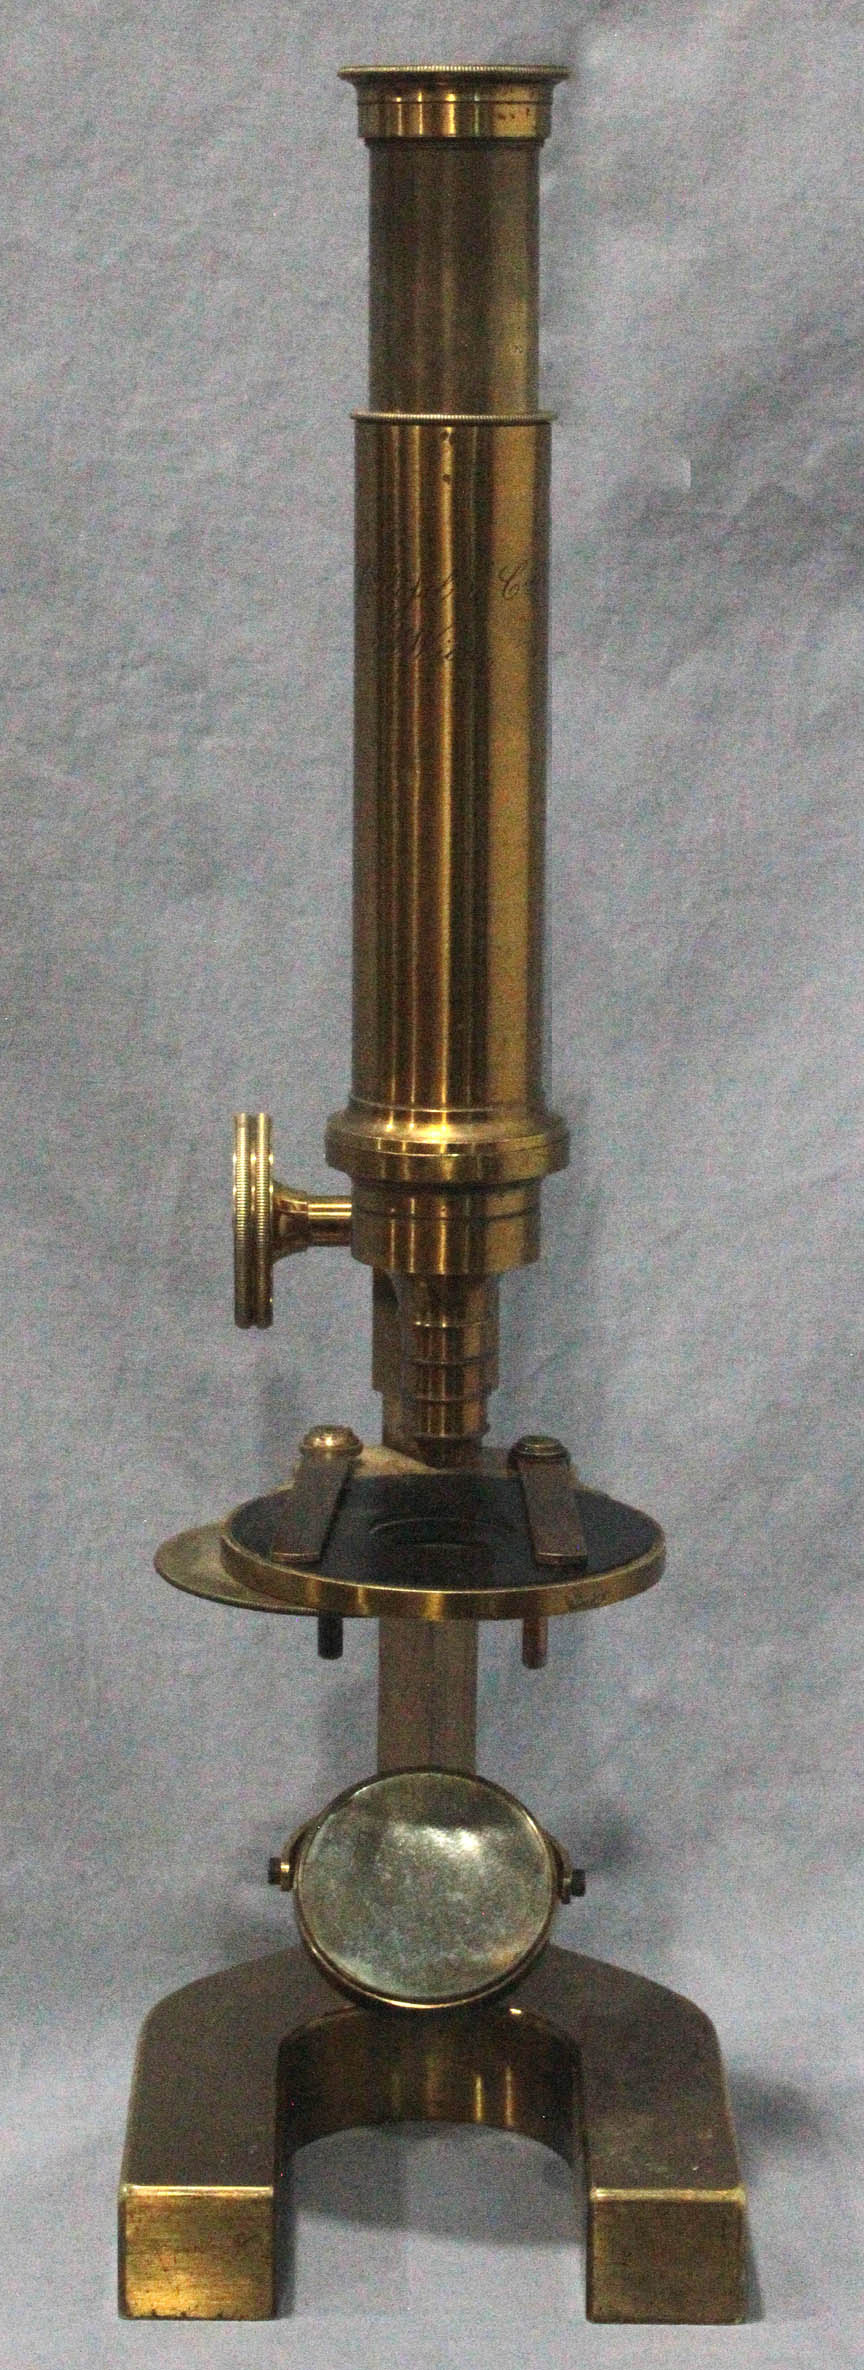 Plossl microscope